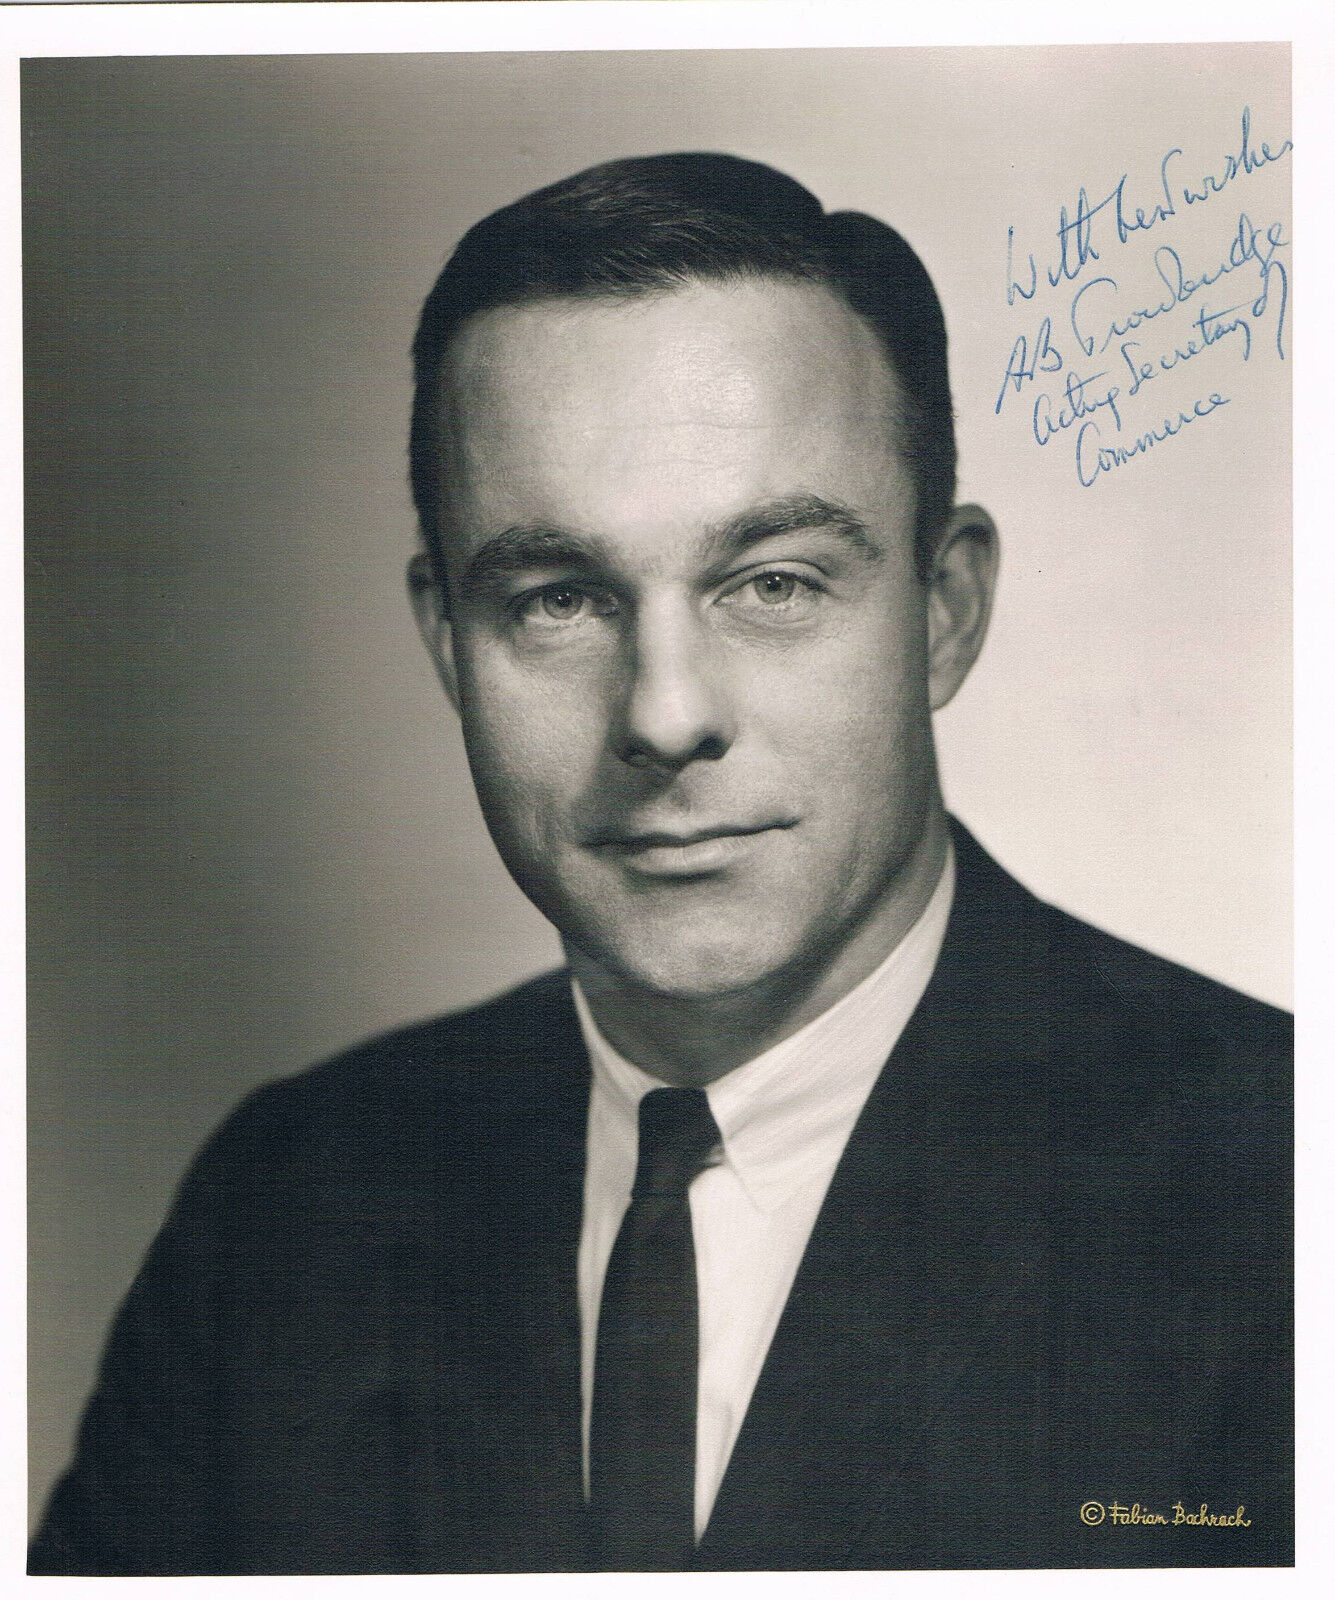 USA Sec. Alexander Trowbridge 1929-2006 genuine autograph signed 8x10